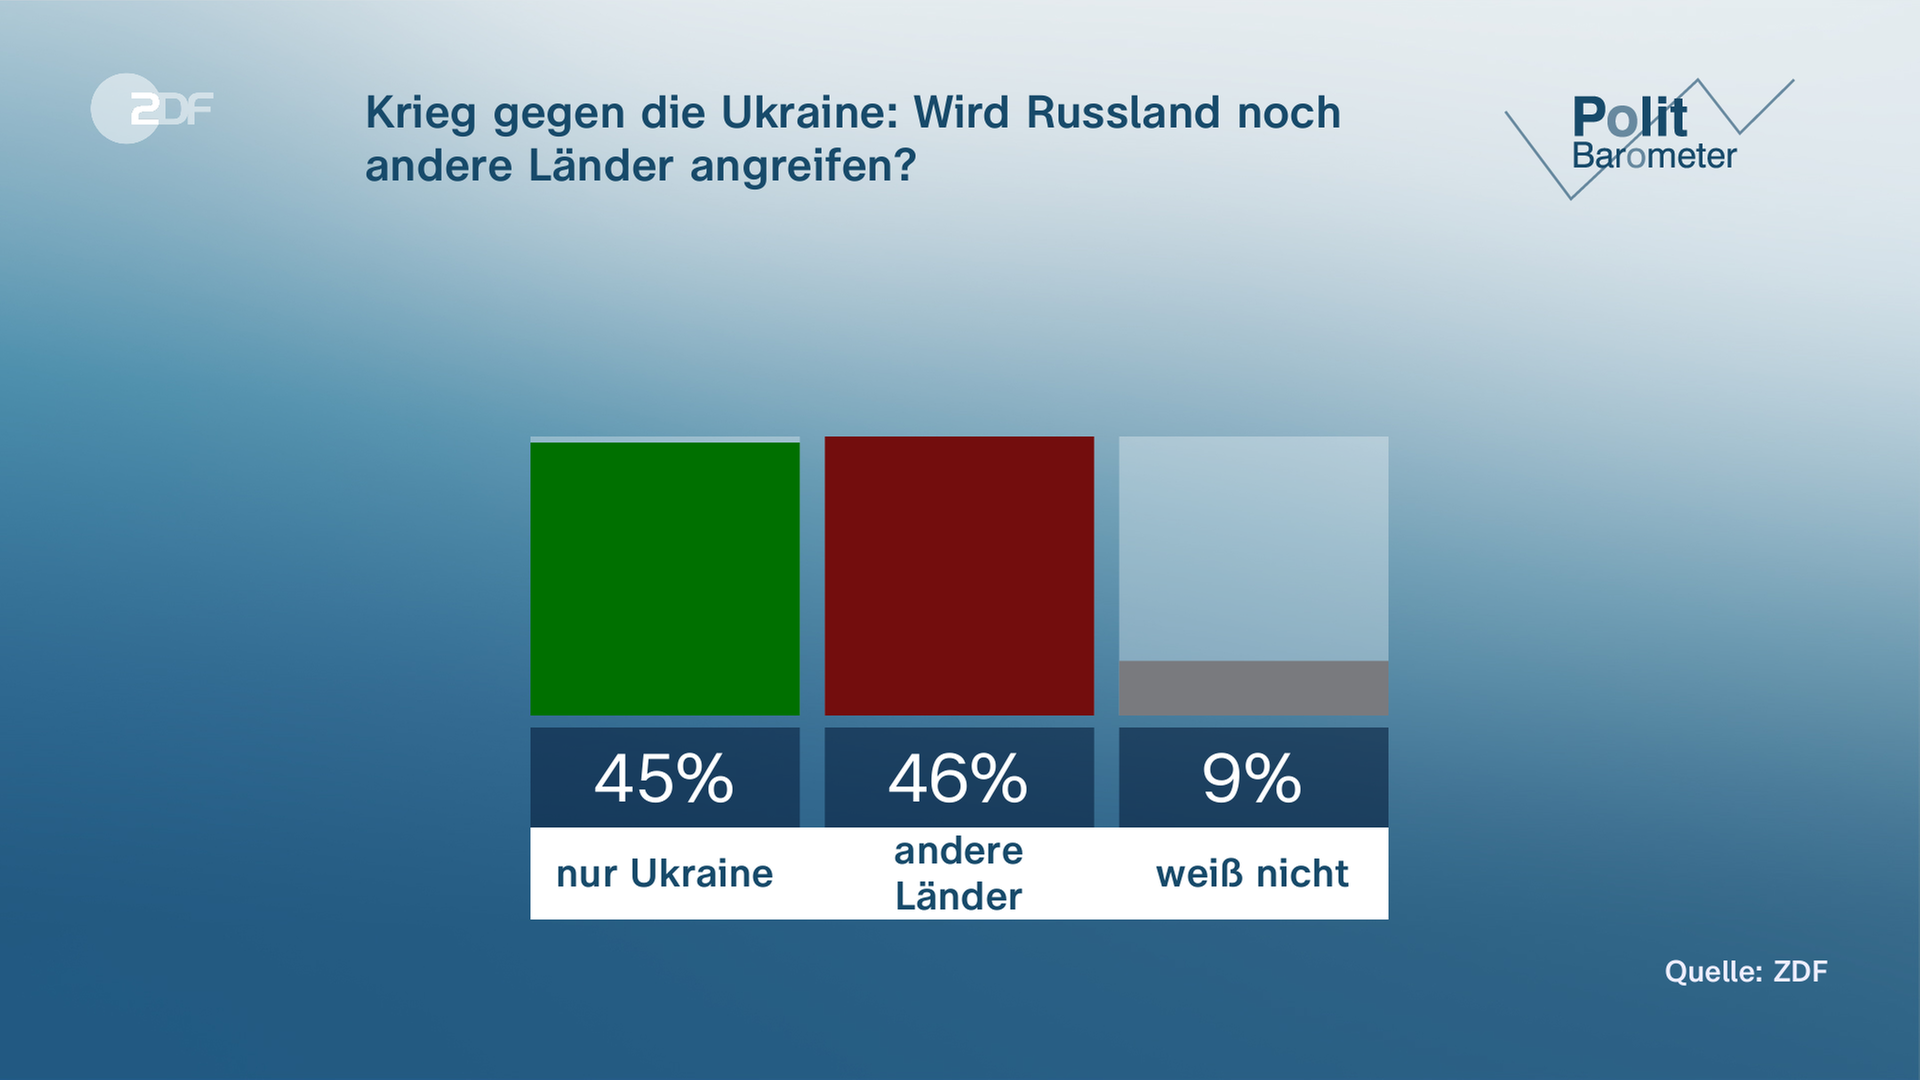 ZDF-Politbarometer Grafik zur Frage, ob Russland noch andere Länder angreifen würde